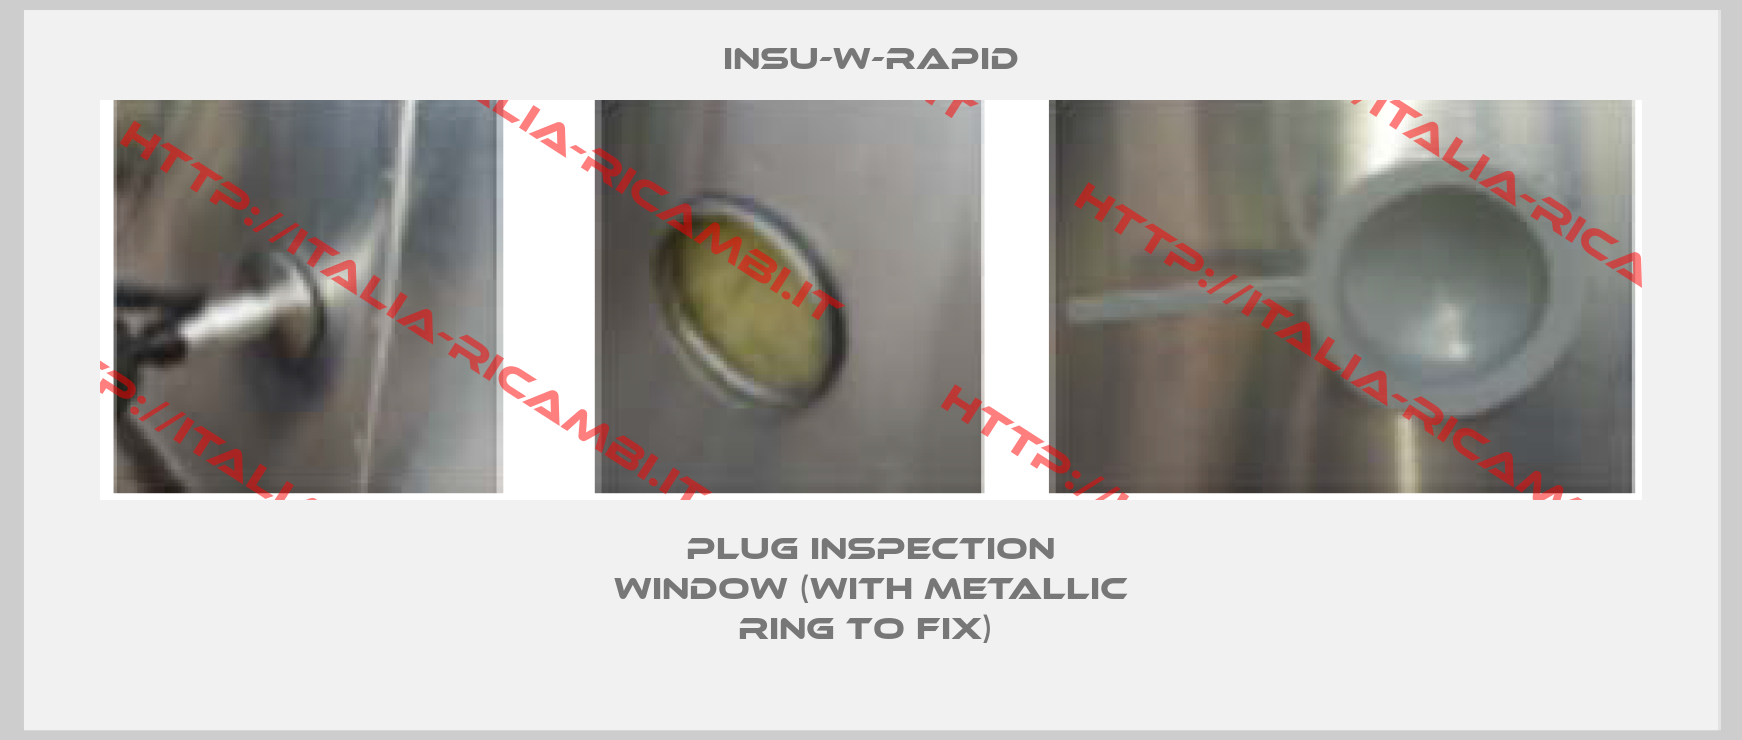 INSU-W-RAPID-Plug Inspection Window (with metallic ring to fix) 